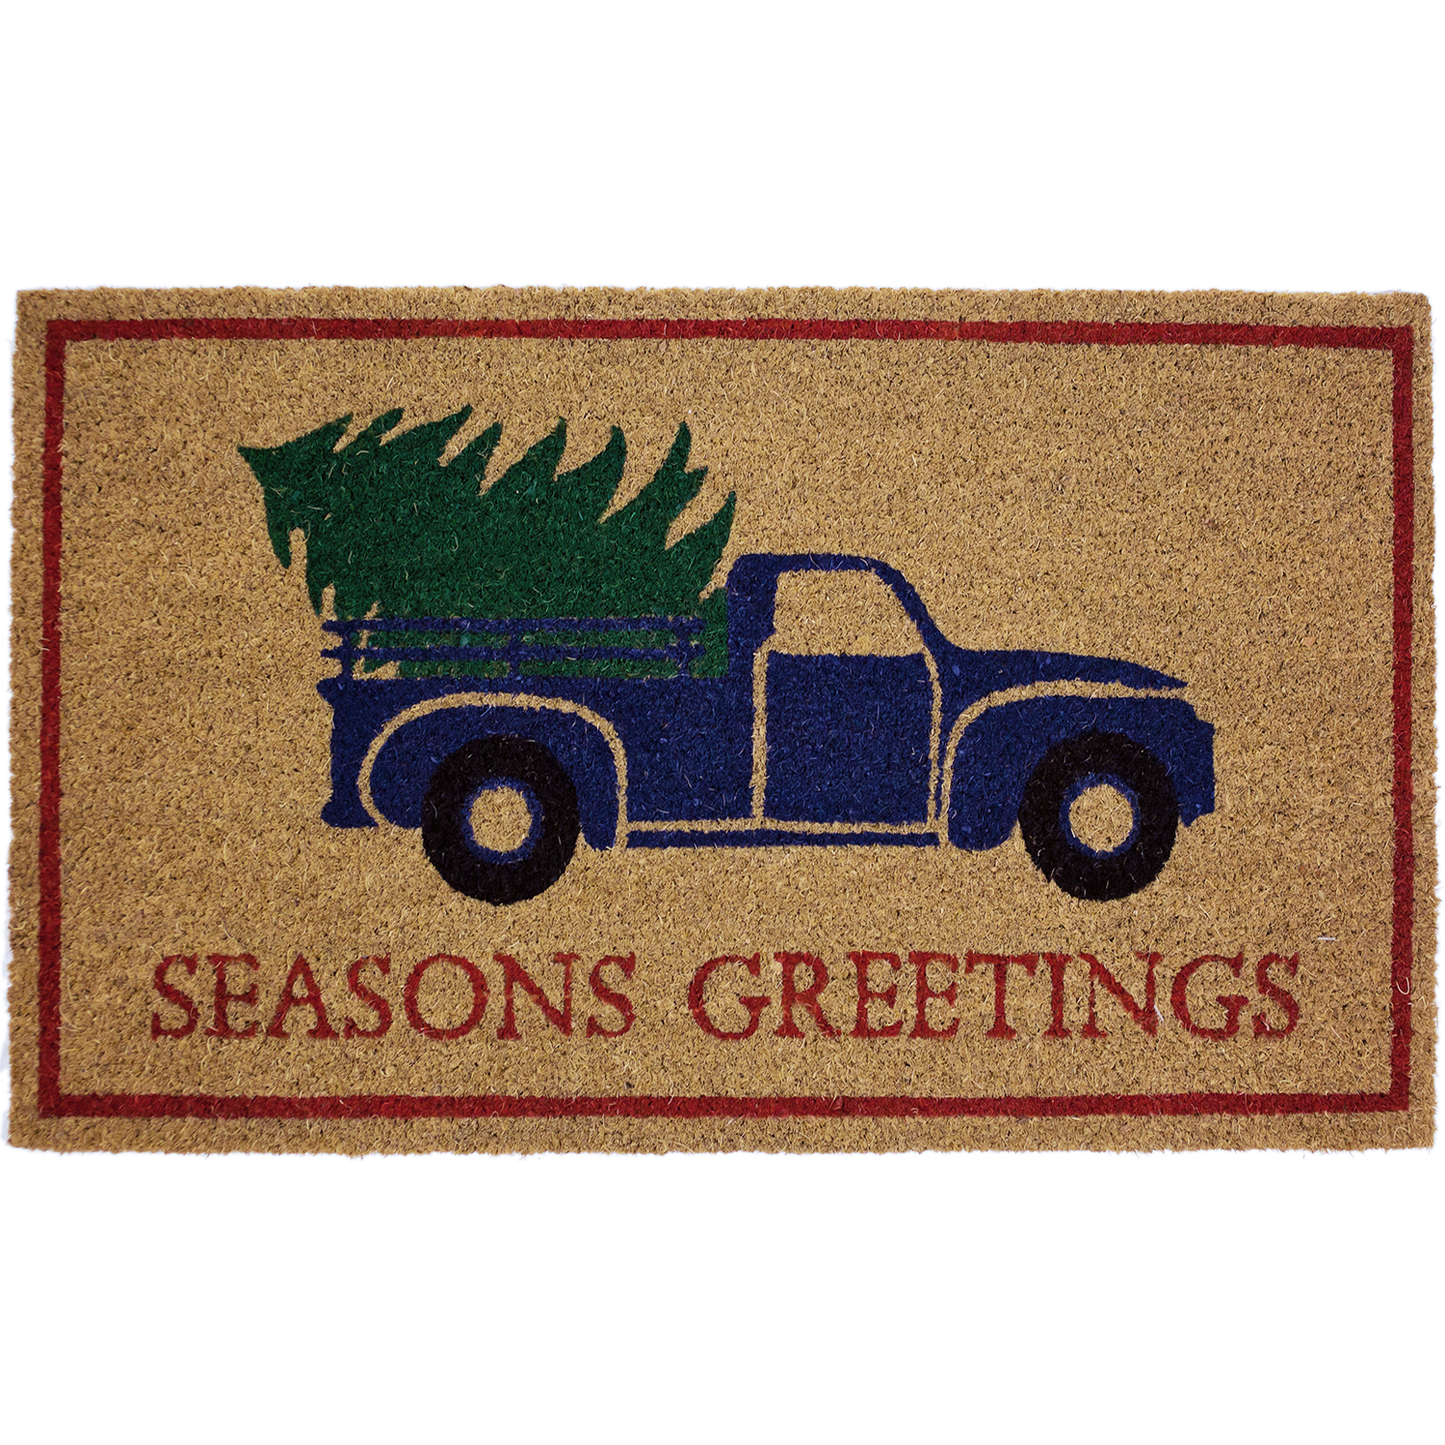 Avera Products "Seasons Greetings" Vintage Truck Coir Mat